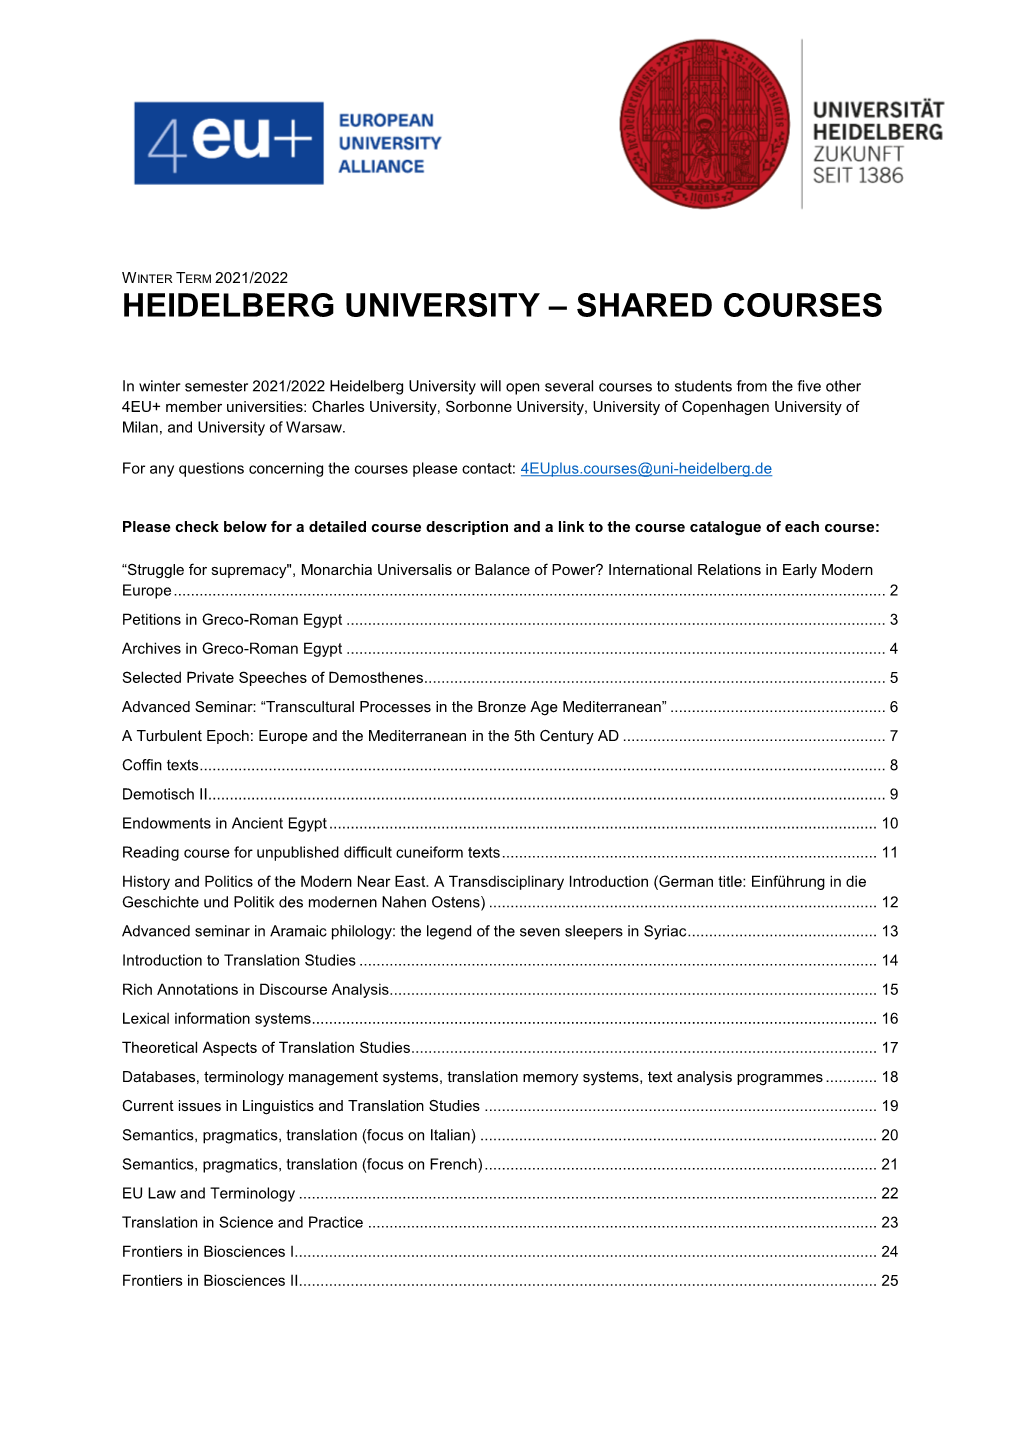 Heidelberg University – Shared Courses